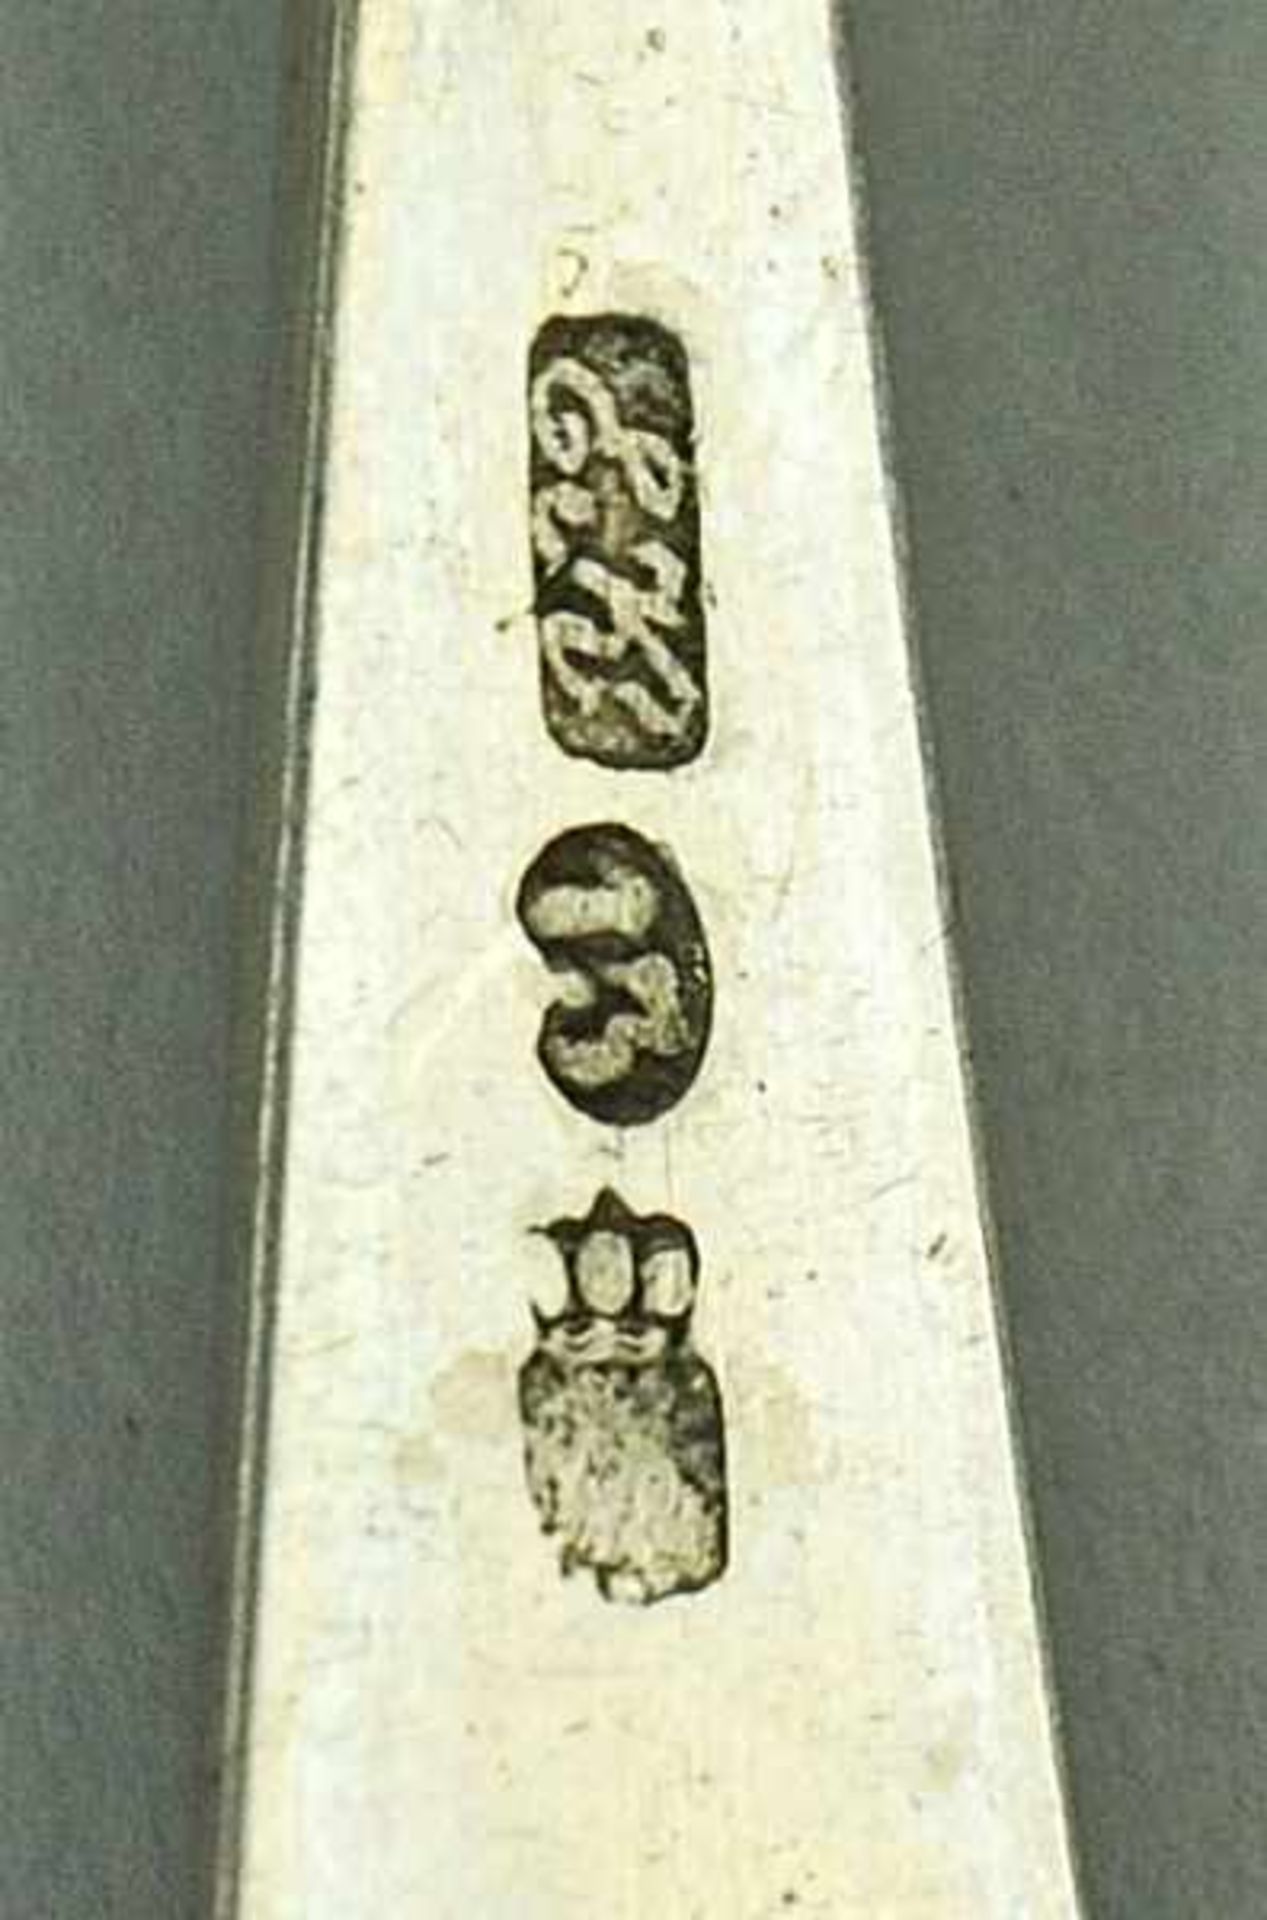 6 KAFFEELÖFFEL mit Monogramm "M.St." u. datiert 1851, Meistermarke E.K., Silber 13 Lot, 131gr, L - Bild 3 aus 3